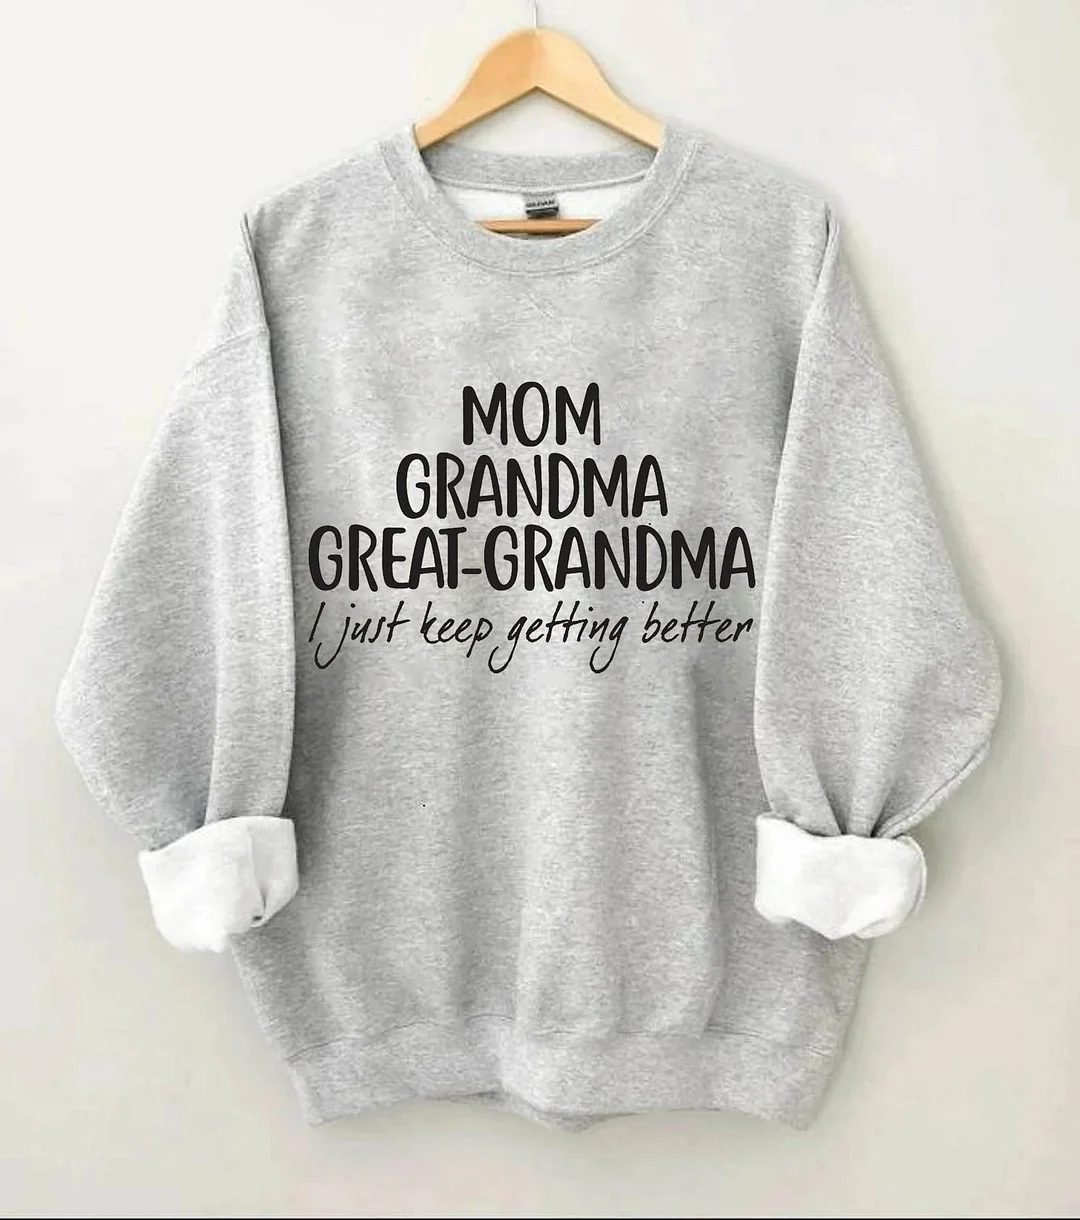 MOM GRANDMA GREAT-GRANDMA Sweatshirt